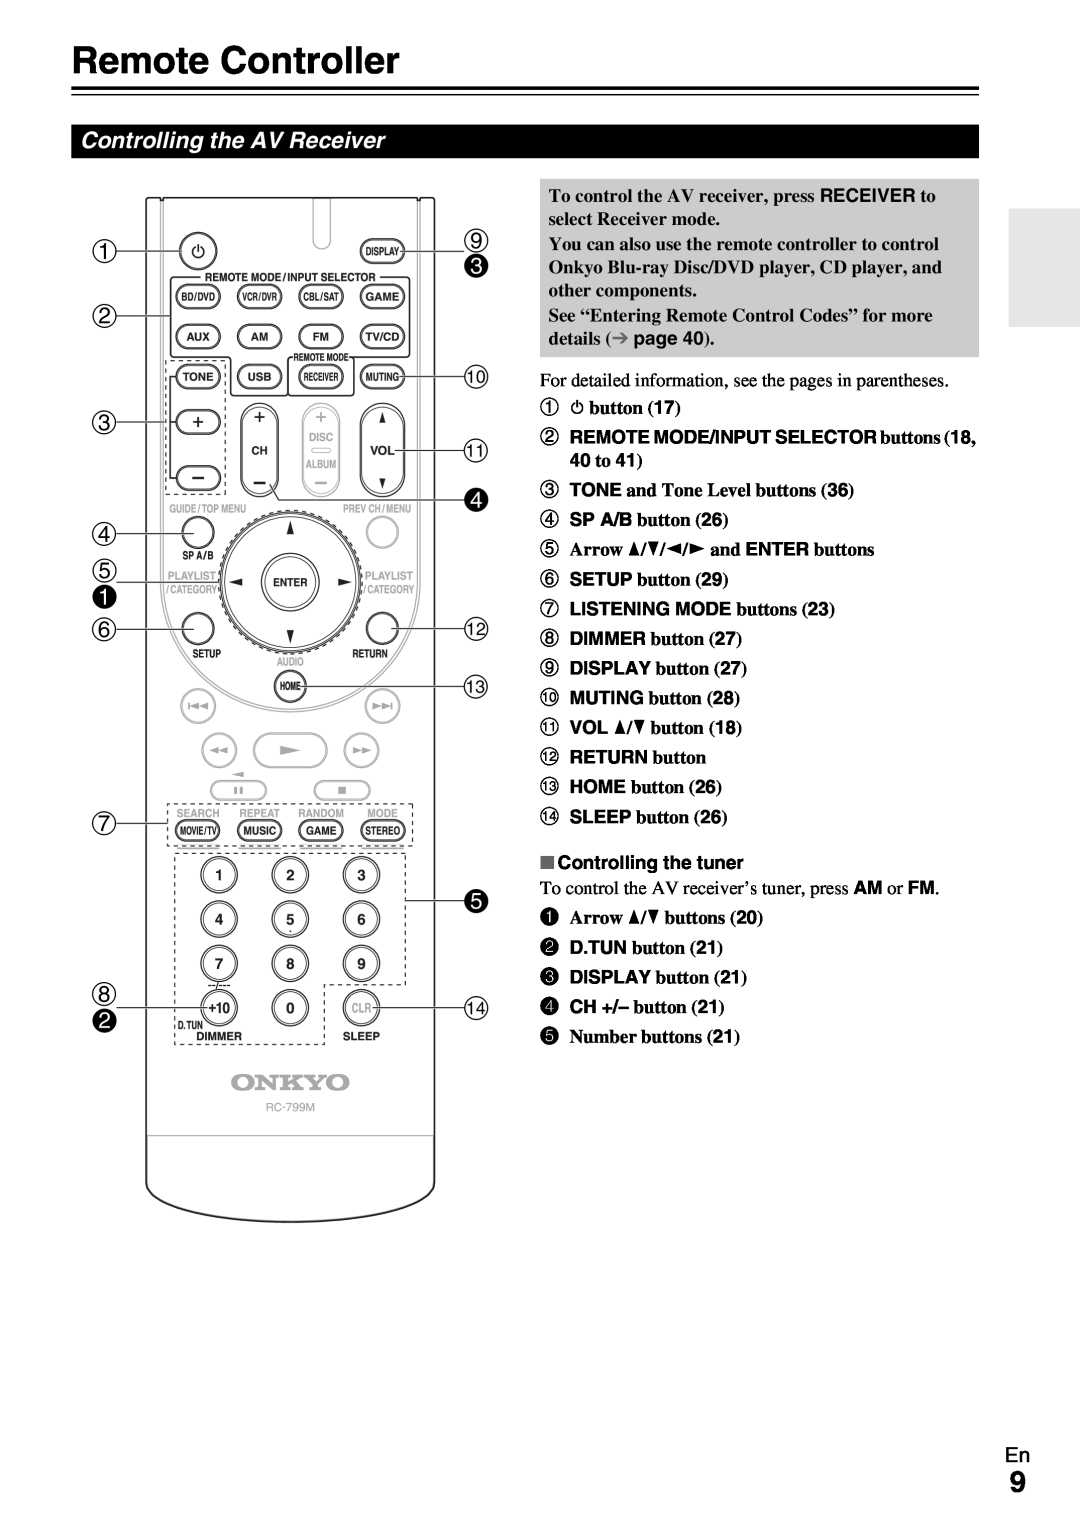 Onkyo TX-SR309 instruction manual Remote Controller 